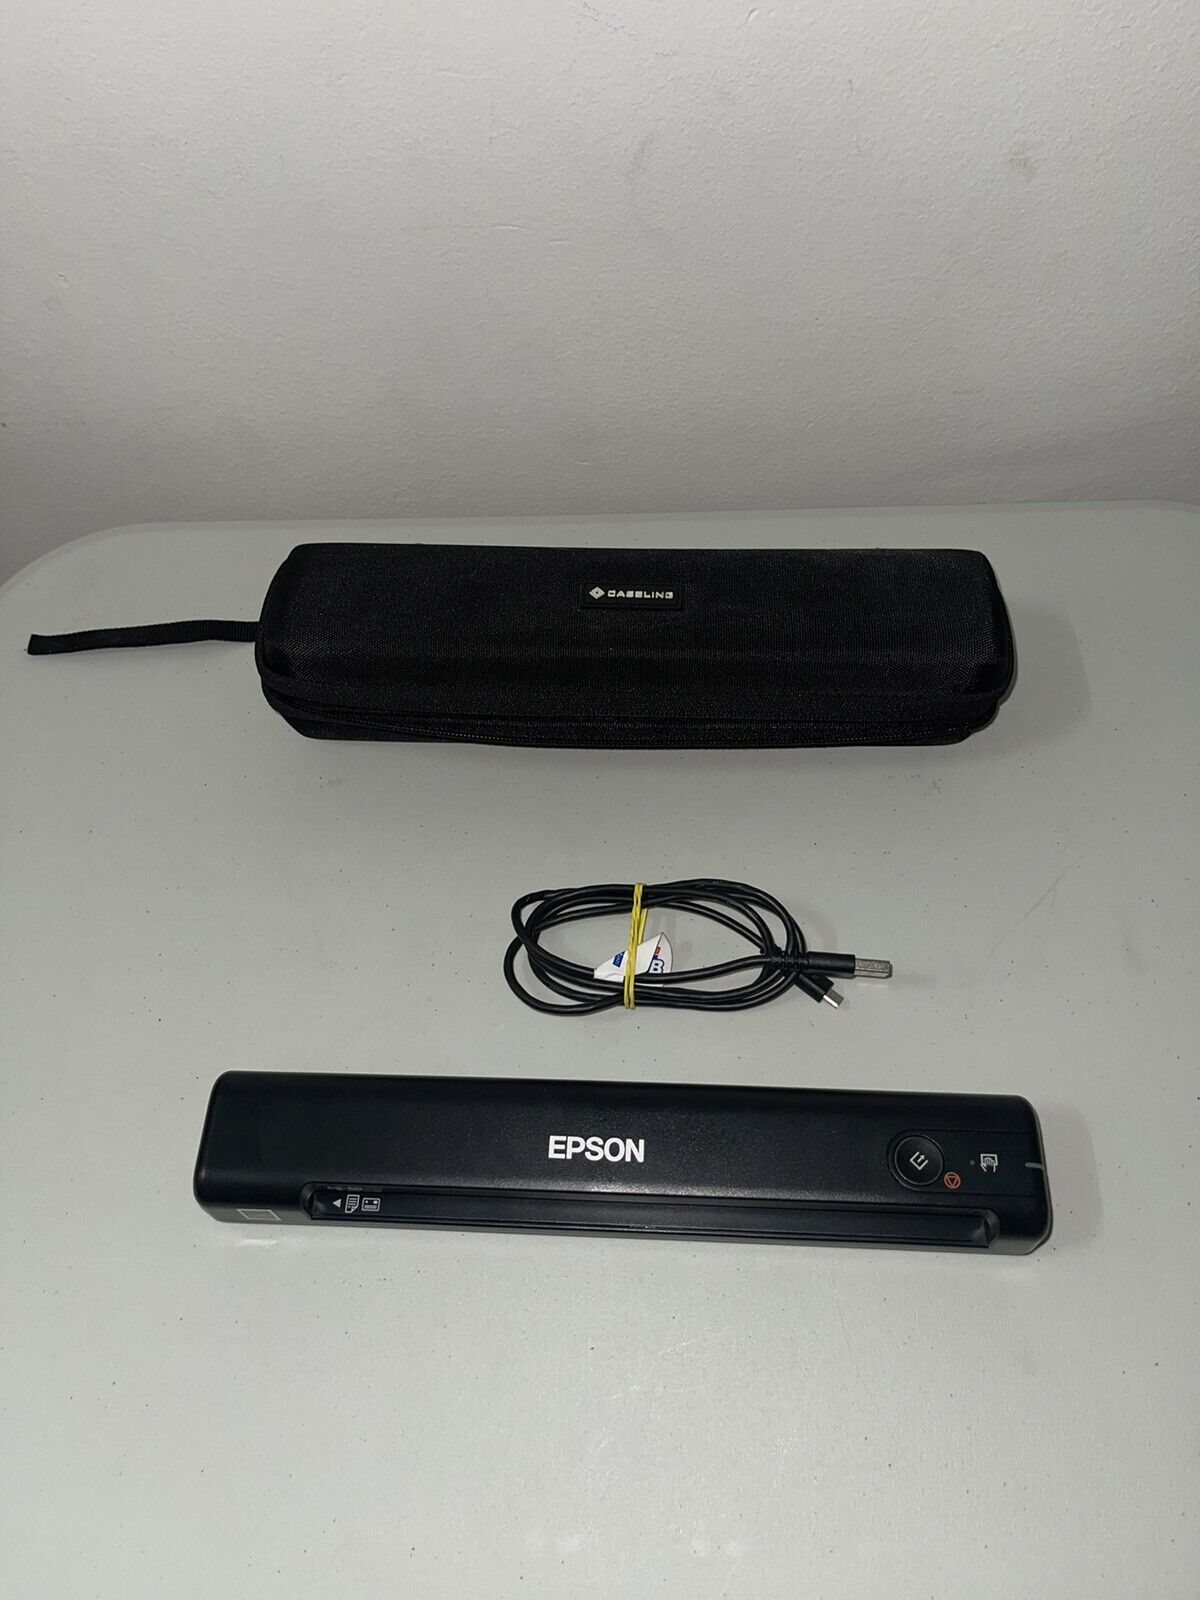 Epson ES-50 WorkForce Portable Document Scanner - Black with Hard Case - Tested